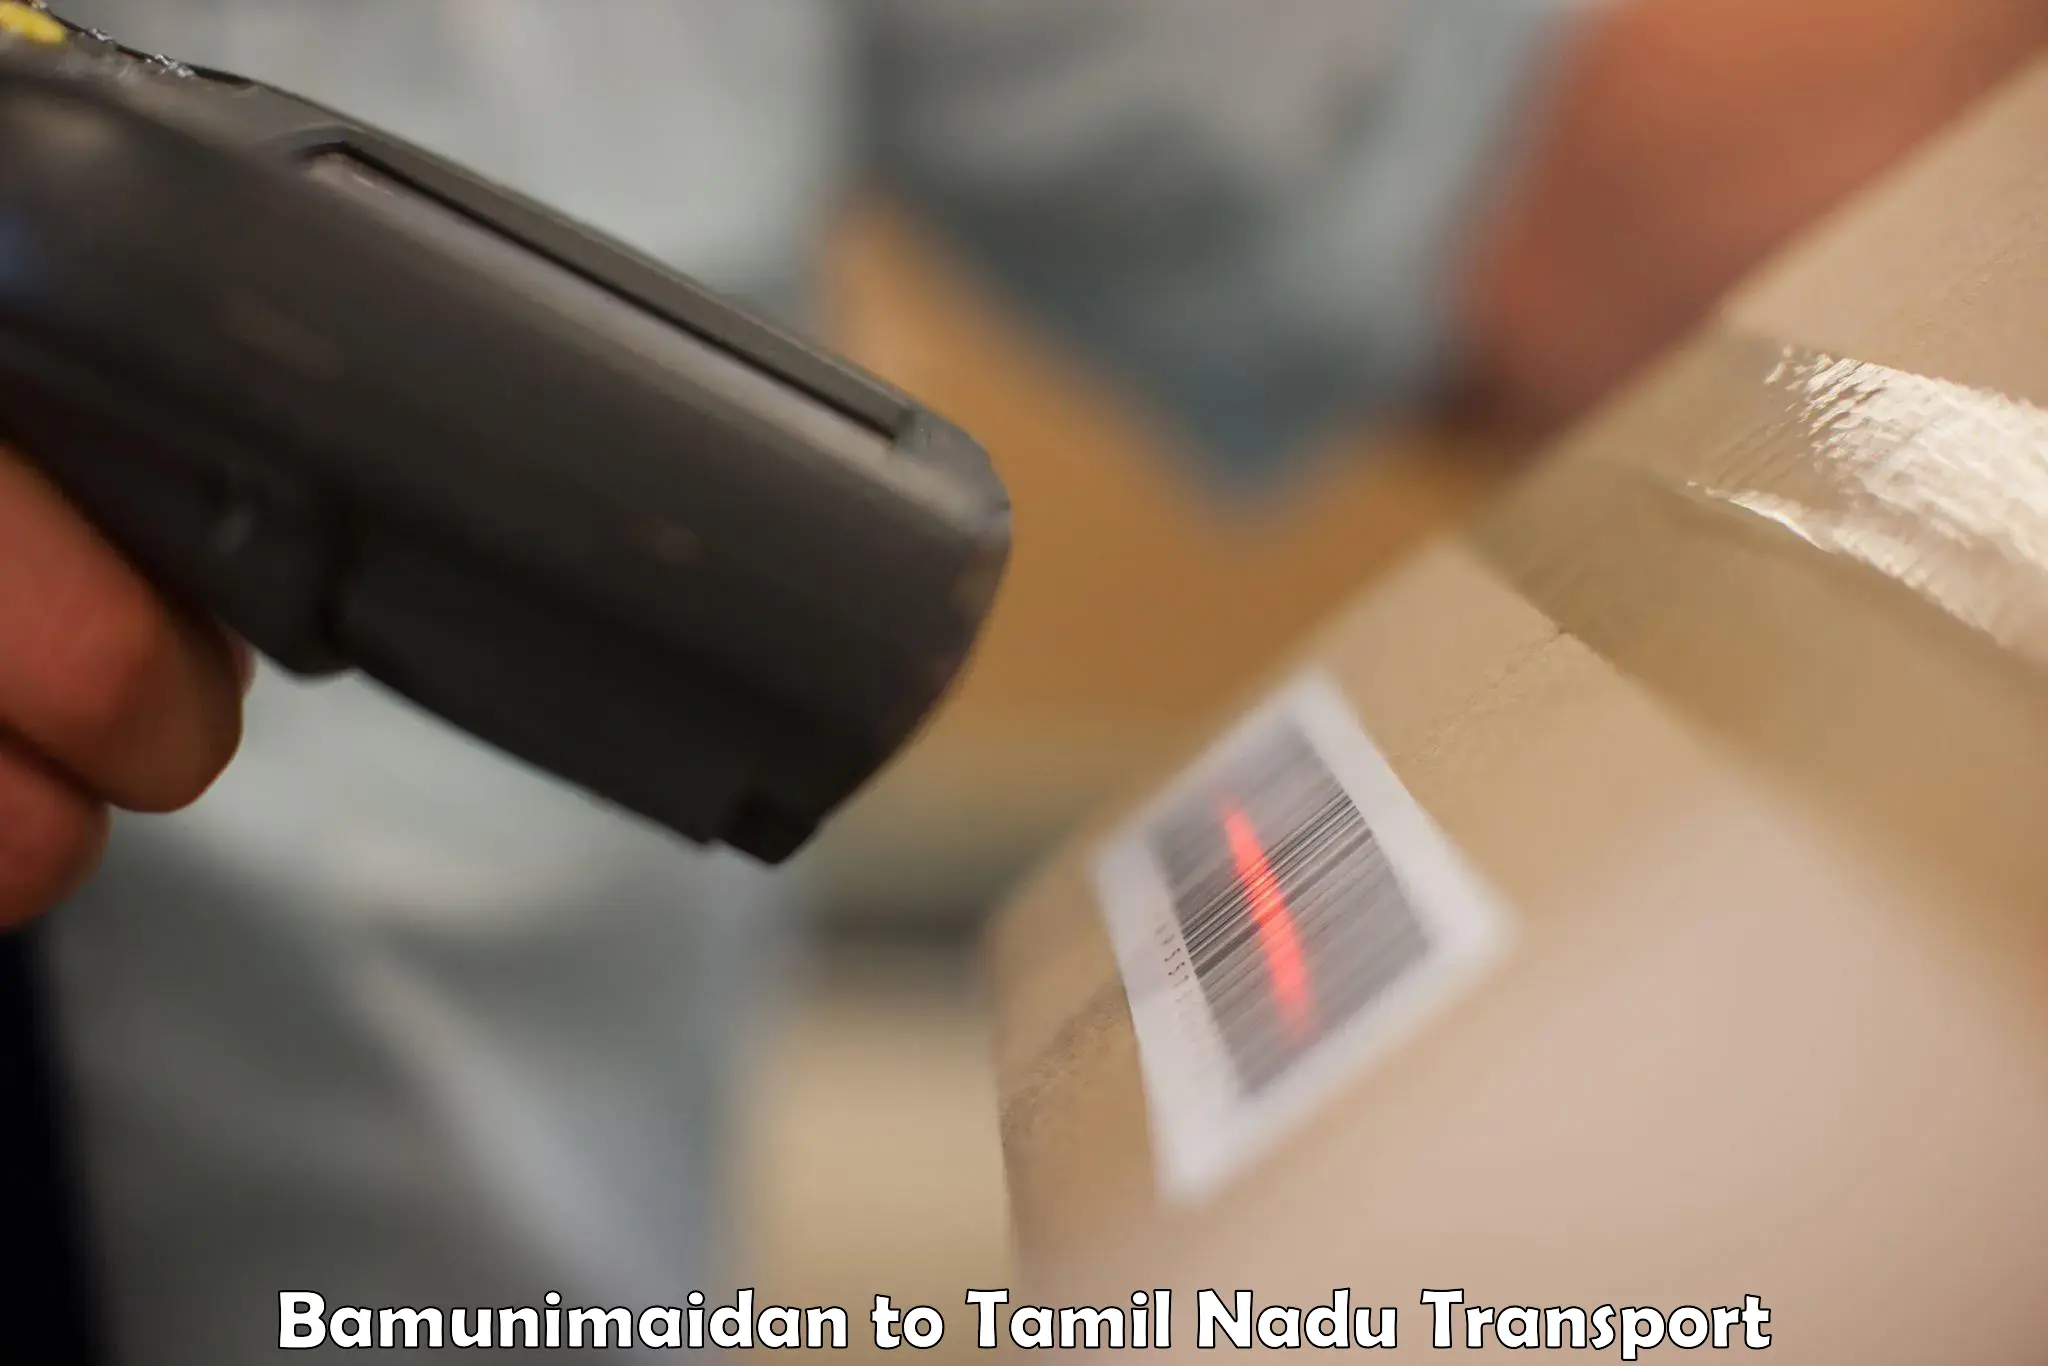 Delivery service Bamunimaidan to Tamil Nadu